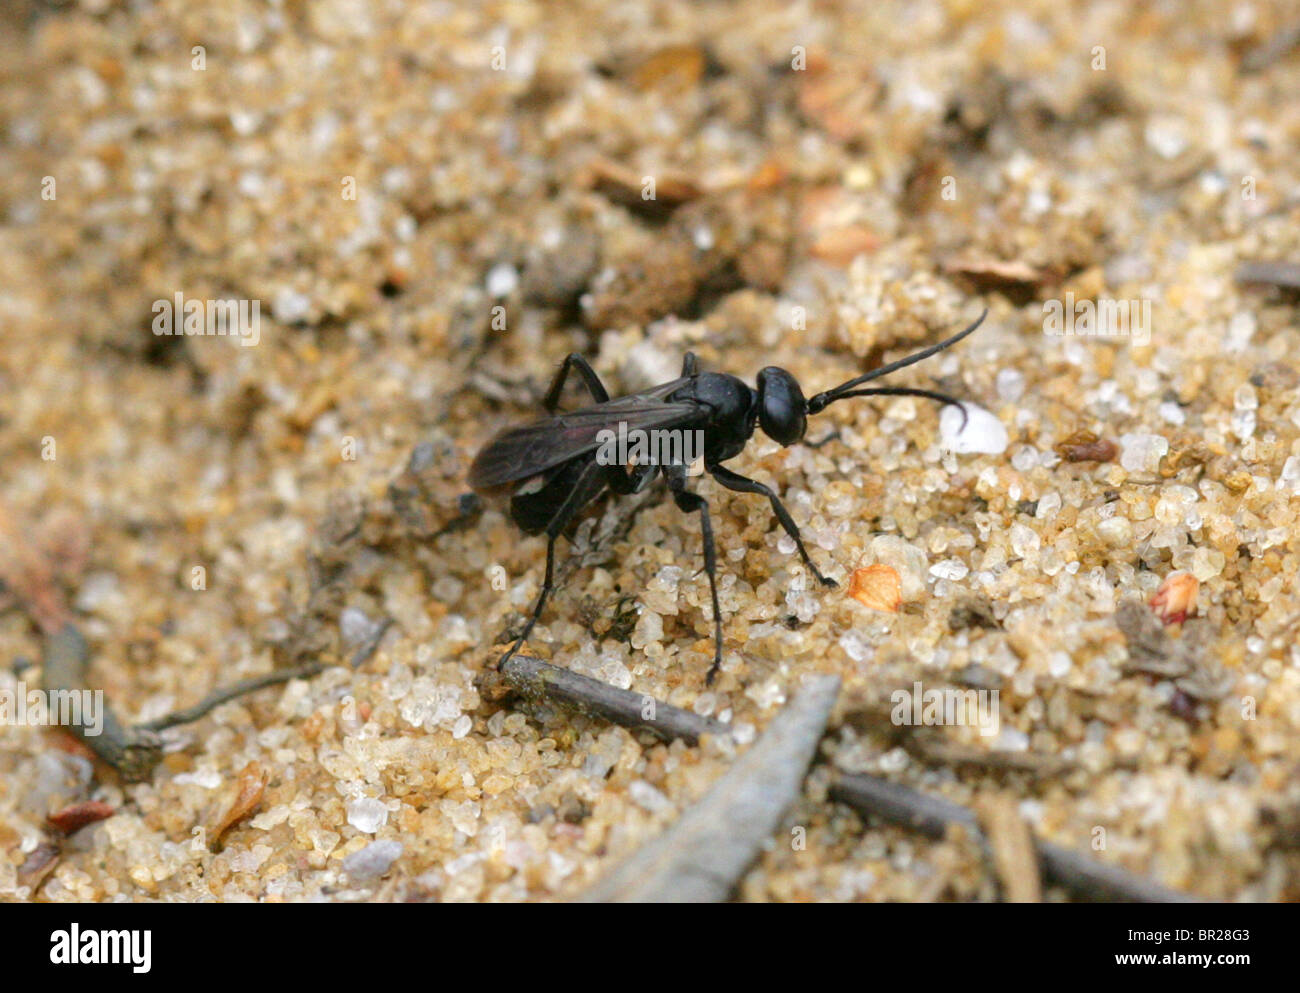 Spider-hunting Wasp, Anoplius nigerrimus, Lepturinae, Pompilidae, Vespoidea, Apocrita, Hymenoptera. A common heathland predator. Stock Photo